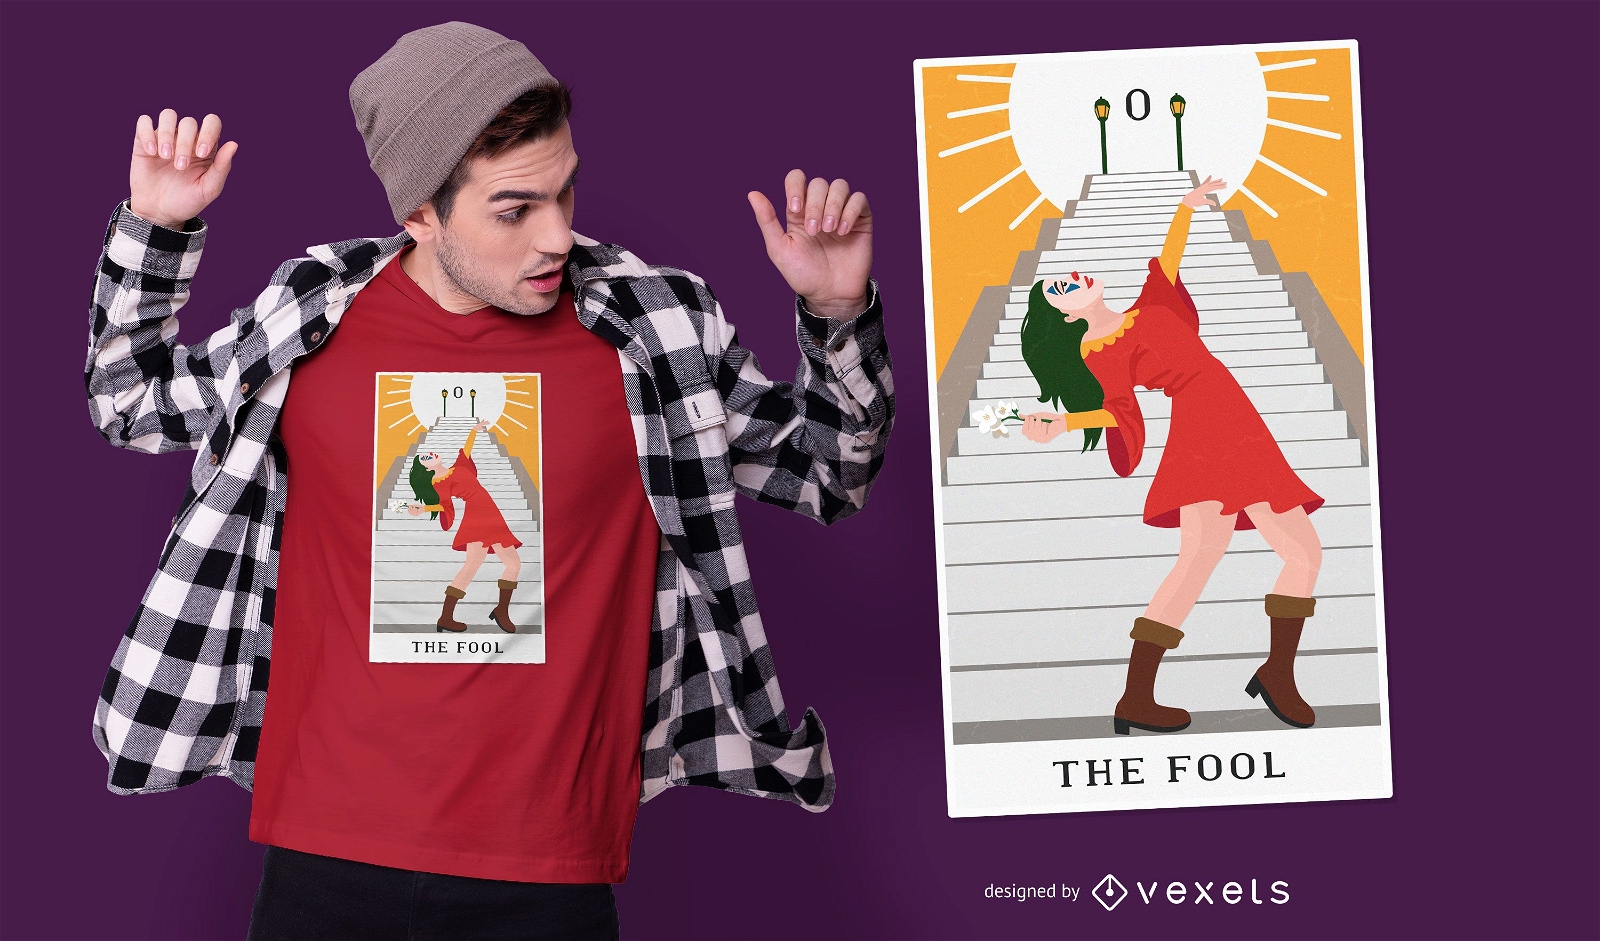 The fool t-shirt design